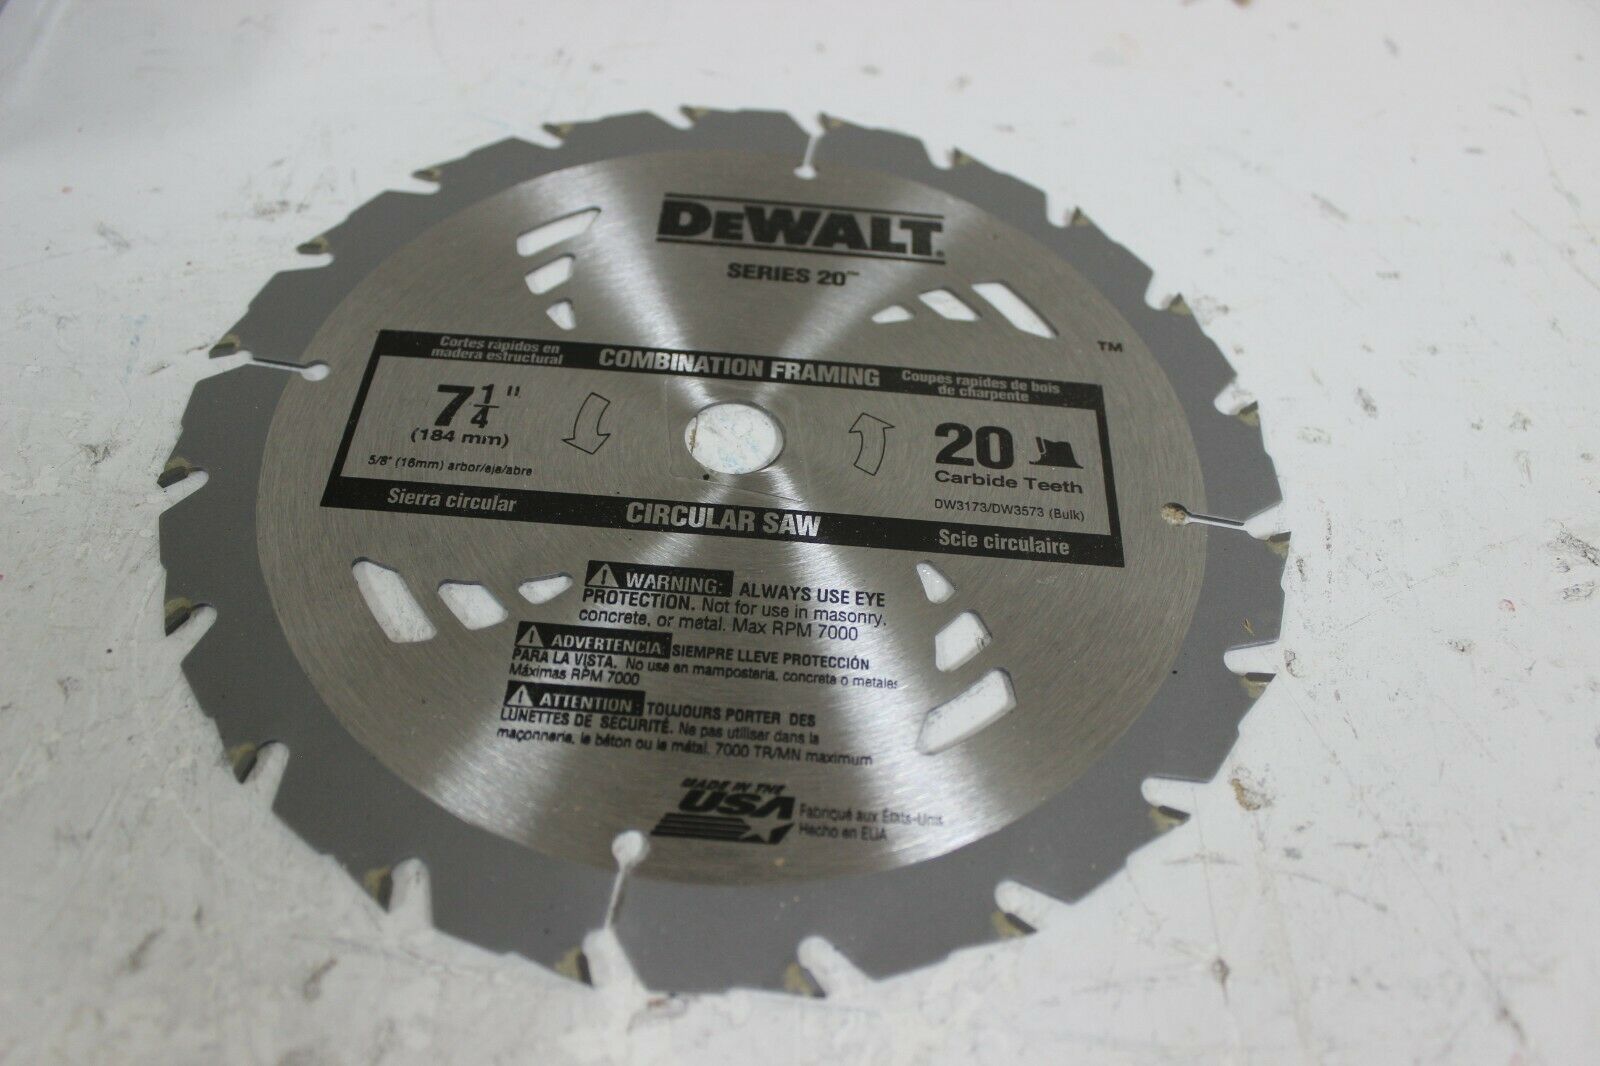 Dewalt DW3173 Series 20 Construction 5 Blade Pro Pack New - $69.30